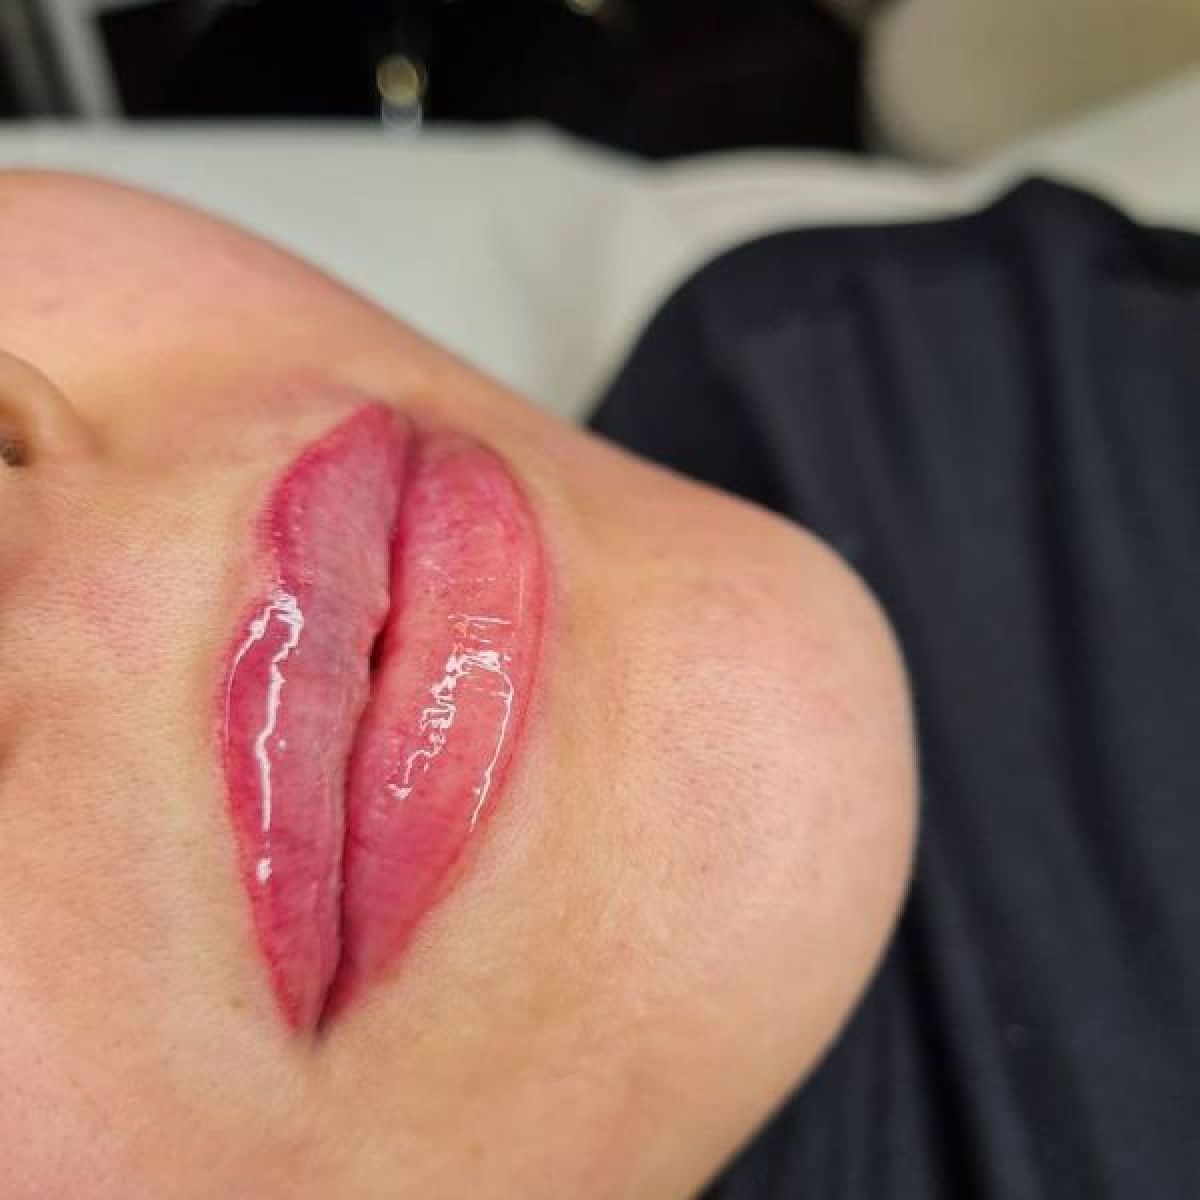 Maquillage permanent Candy lips à Niort (79) Par Rhizlene - Estheca